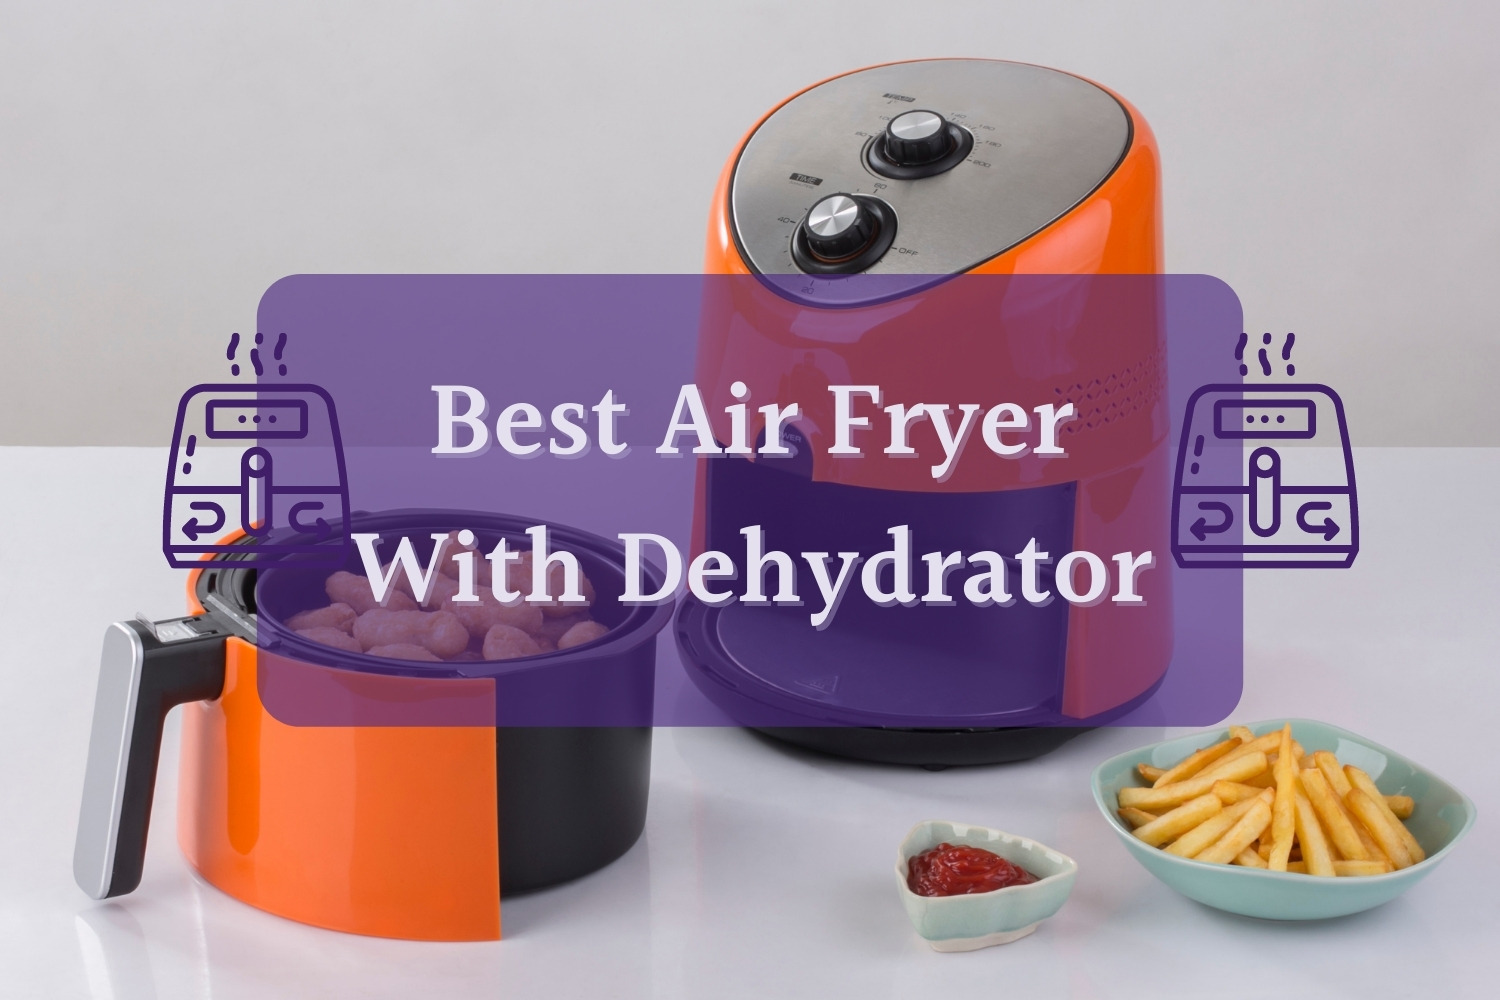 https://clankitchen.com/wp-content/uploads/2021/07/Best-Air-Fryer-with-Dehydrator.jpg